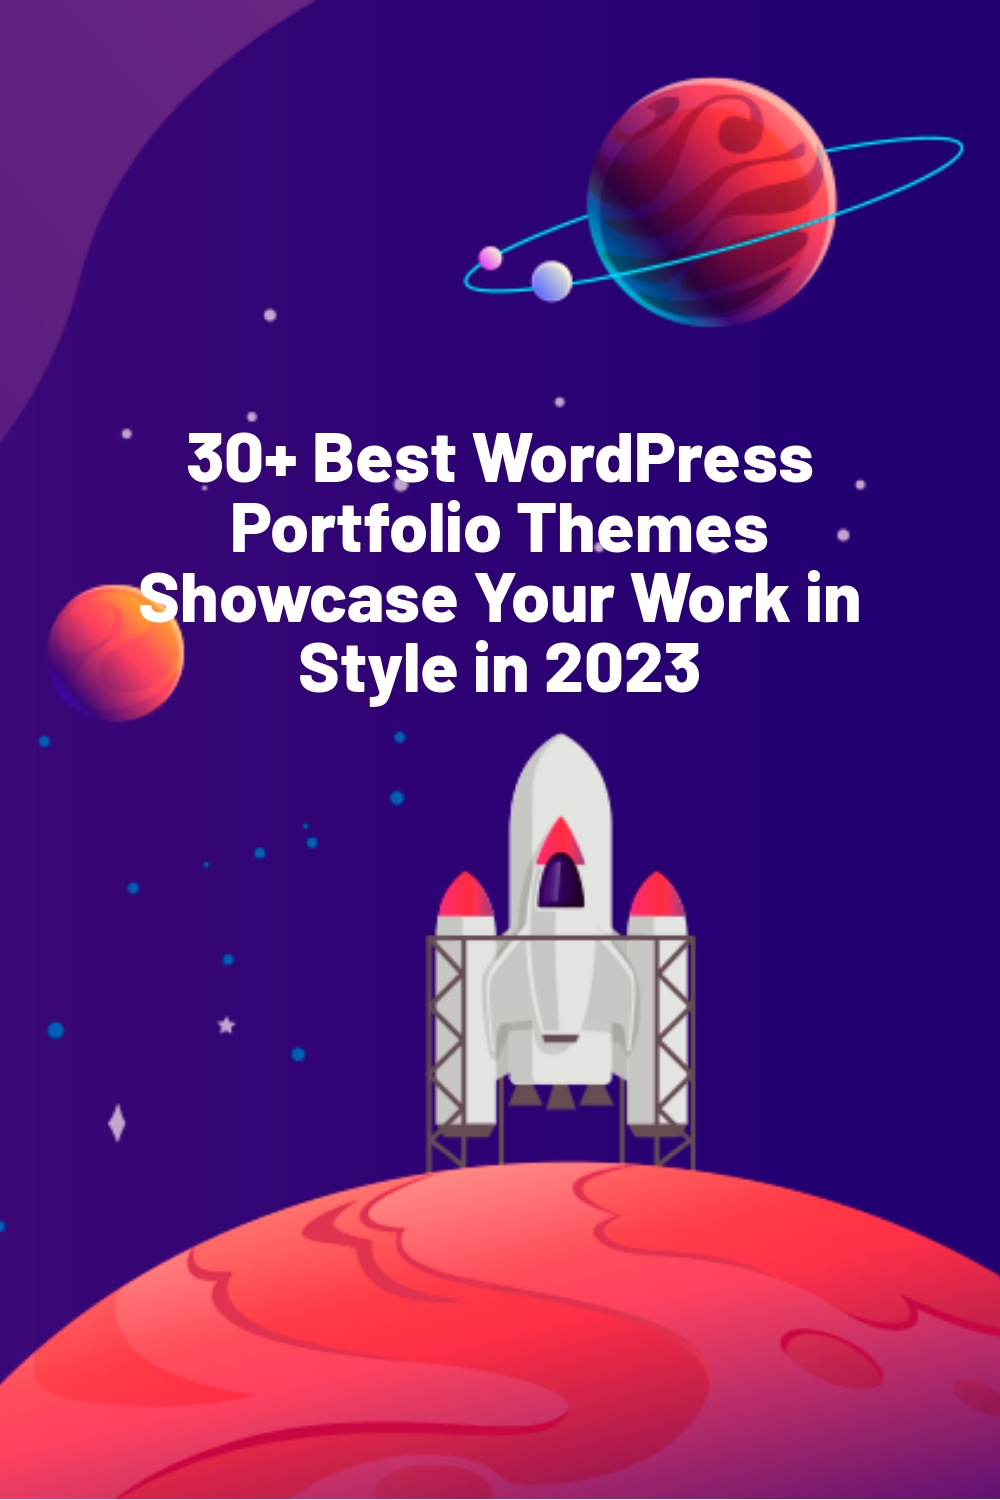 30+ Best WordPress Portfolio Themes Showcase Your Work in Style in 2023